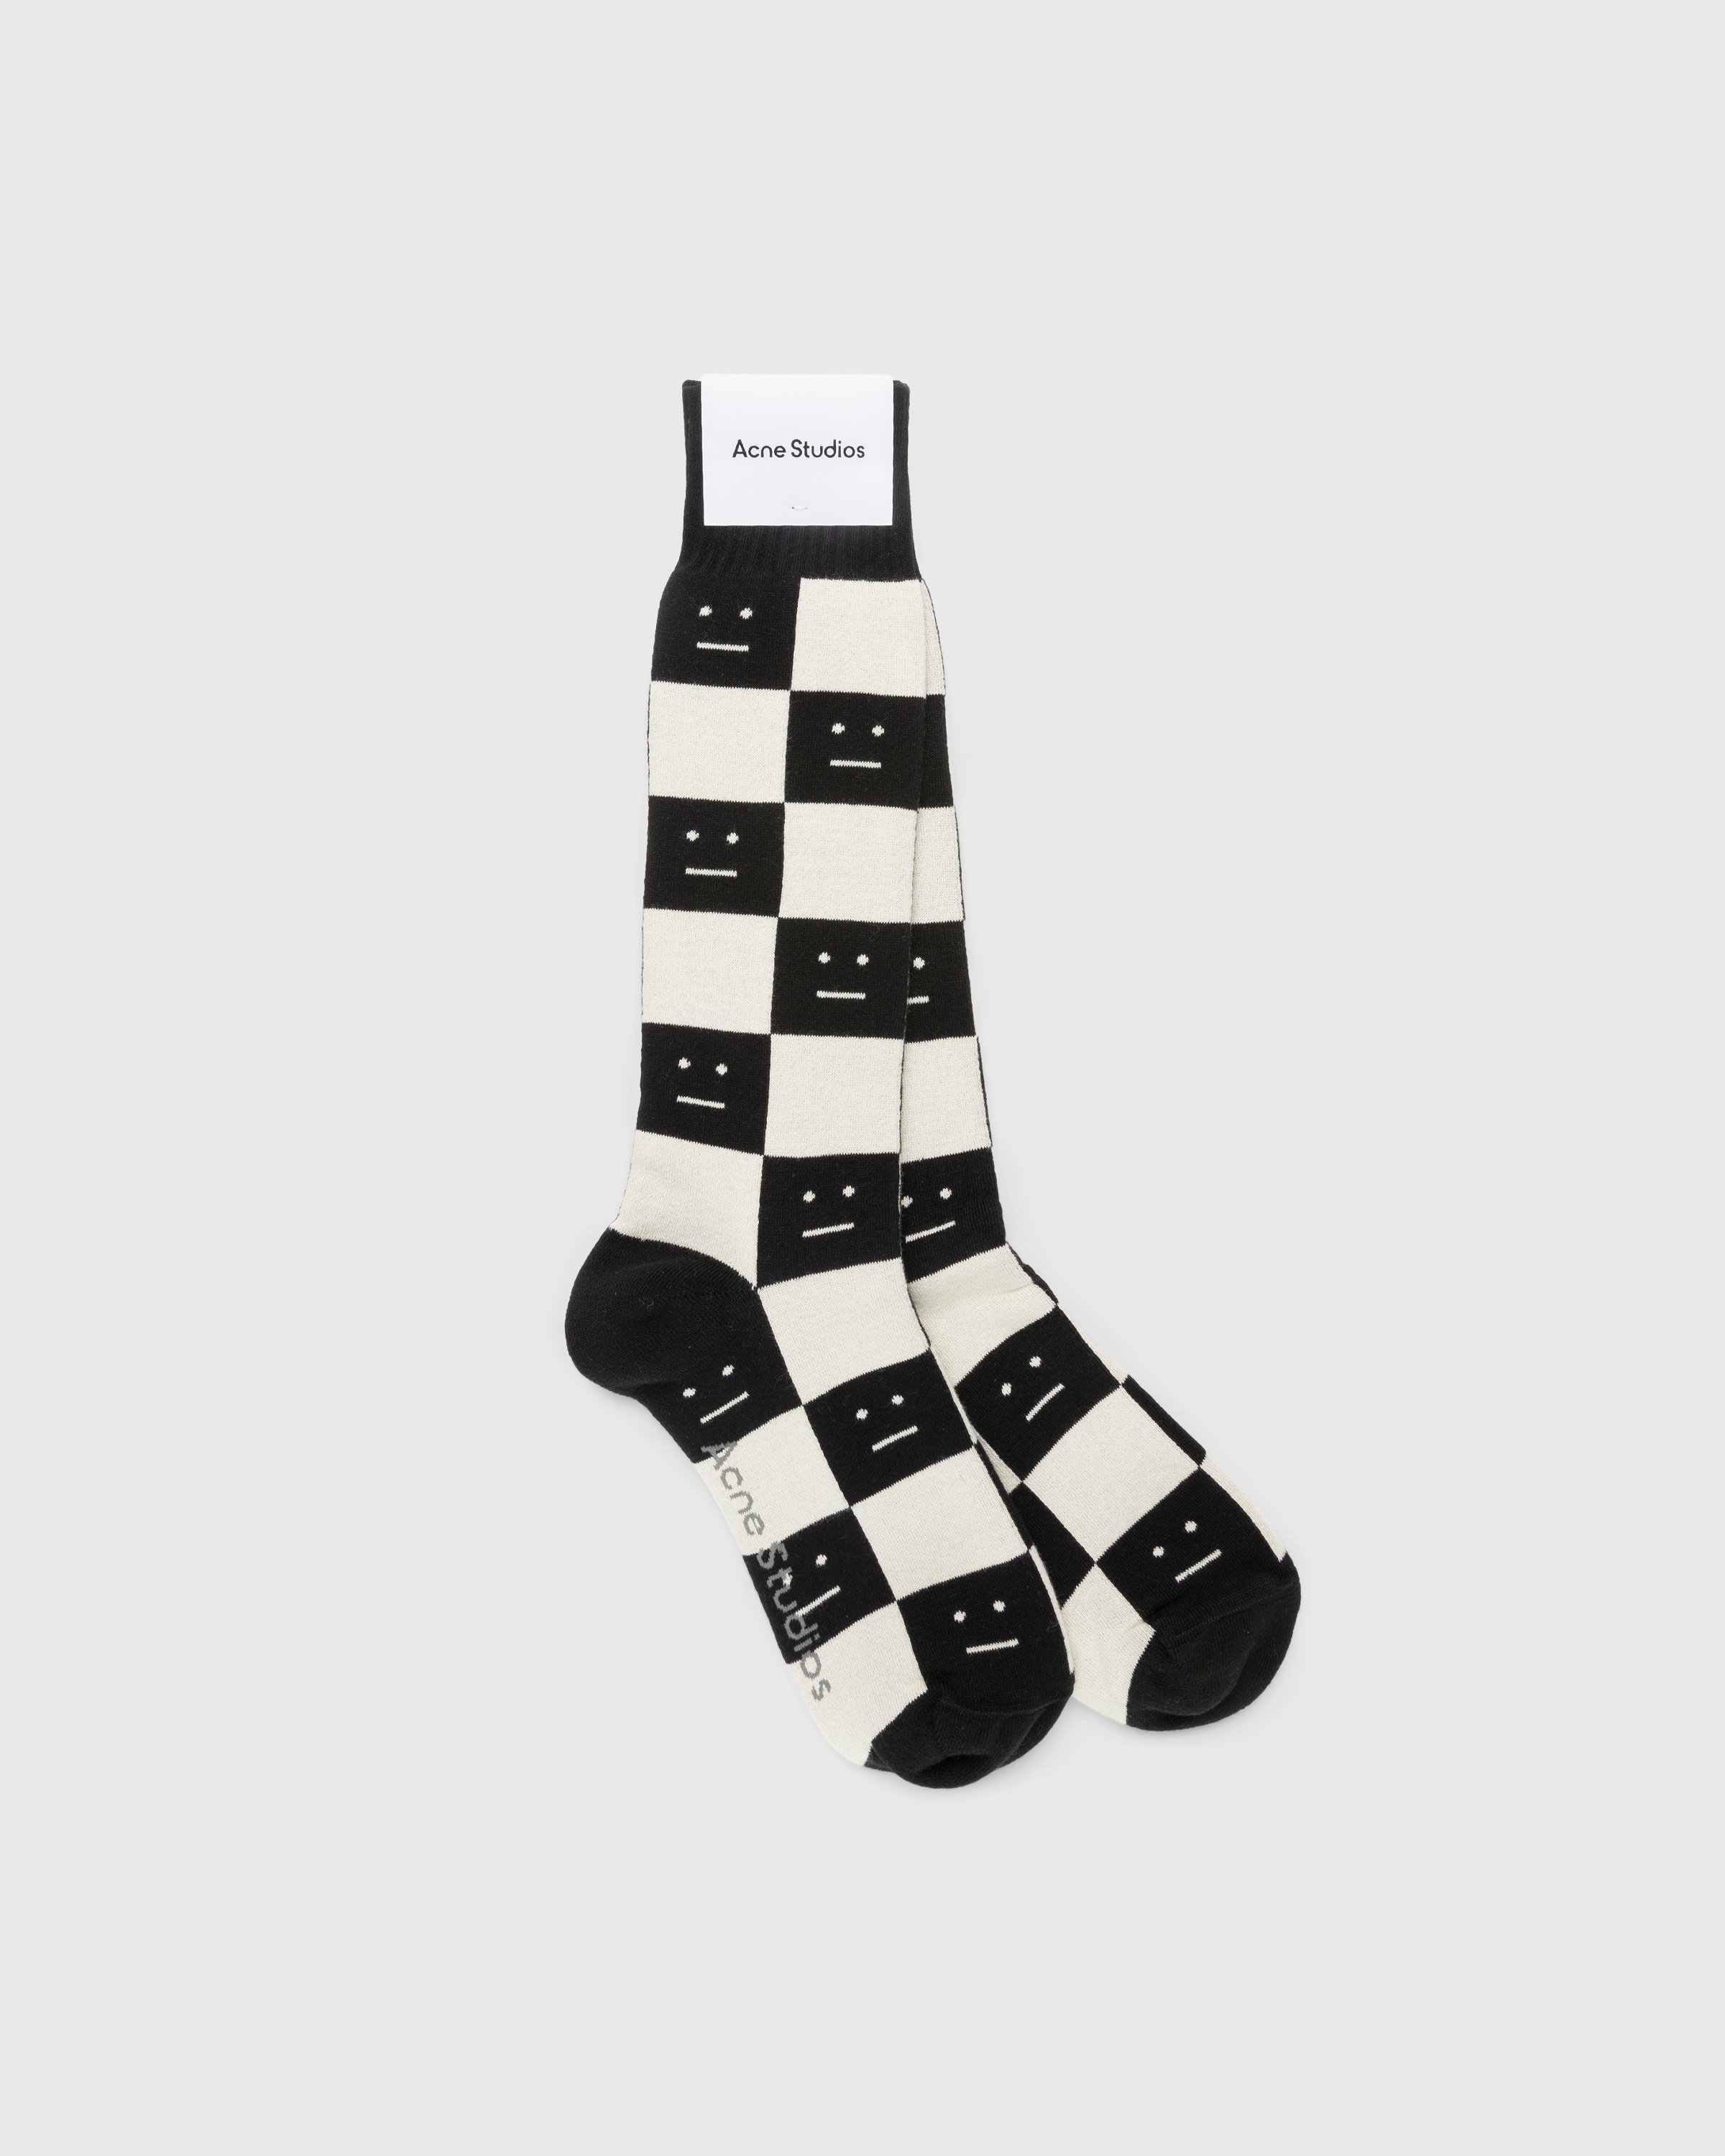 Acne Studios - Checkerboard Socks Black/Oatmeal Beige - Accessories - Black - Image 2